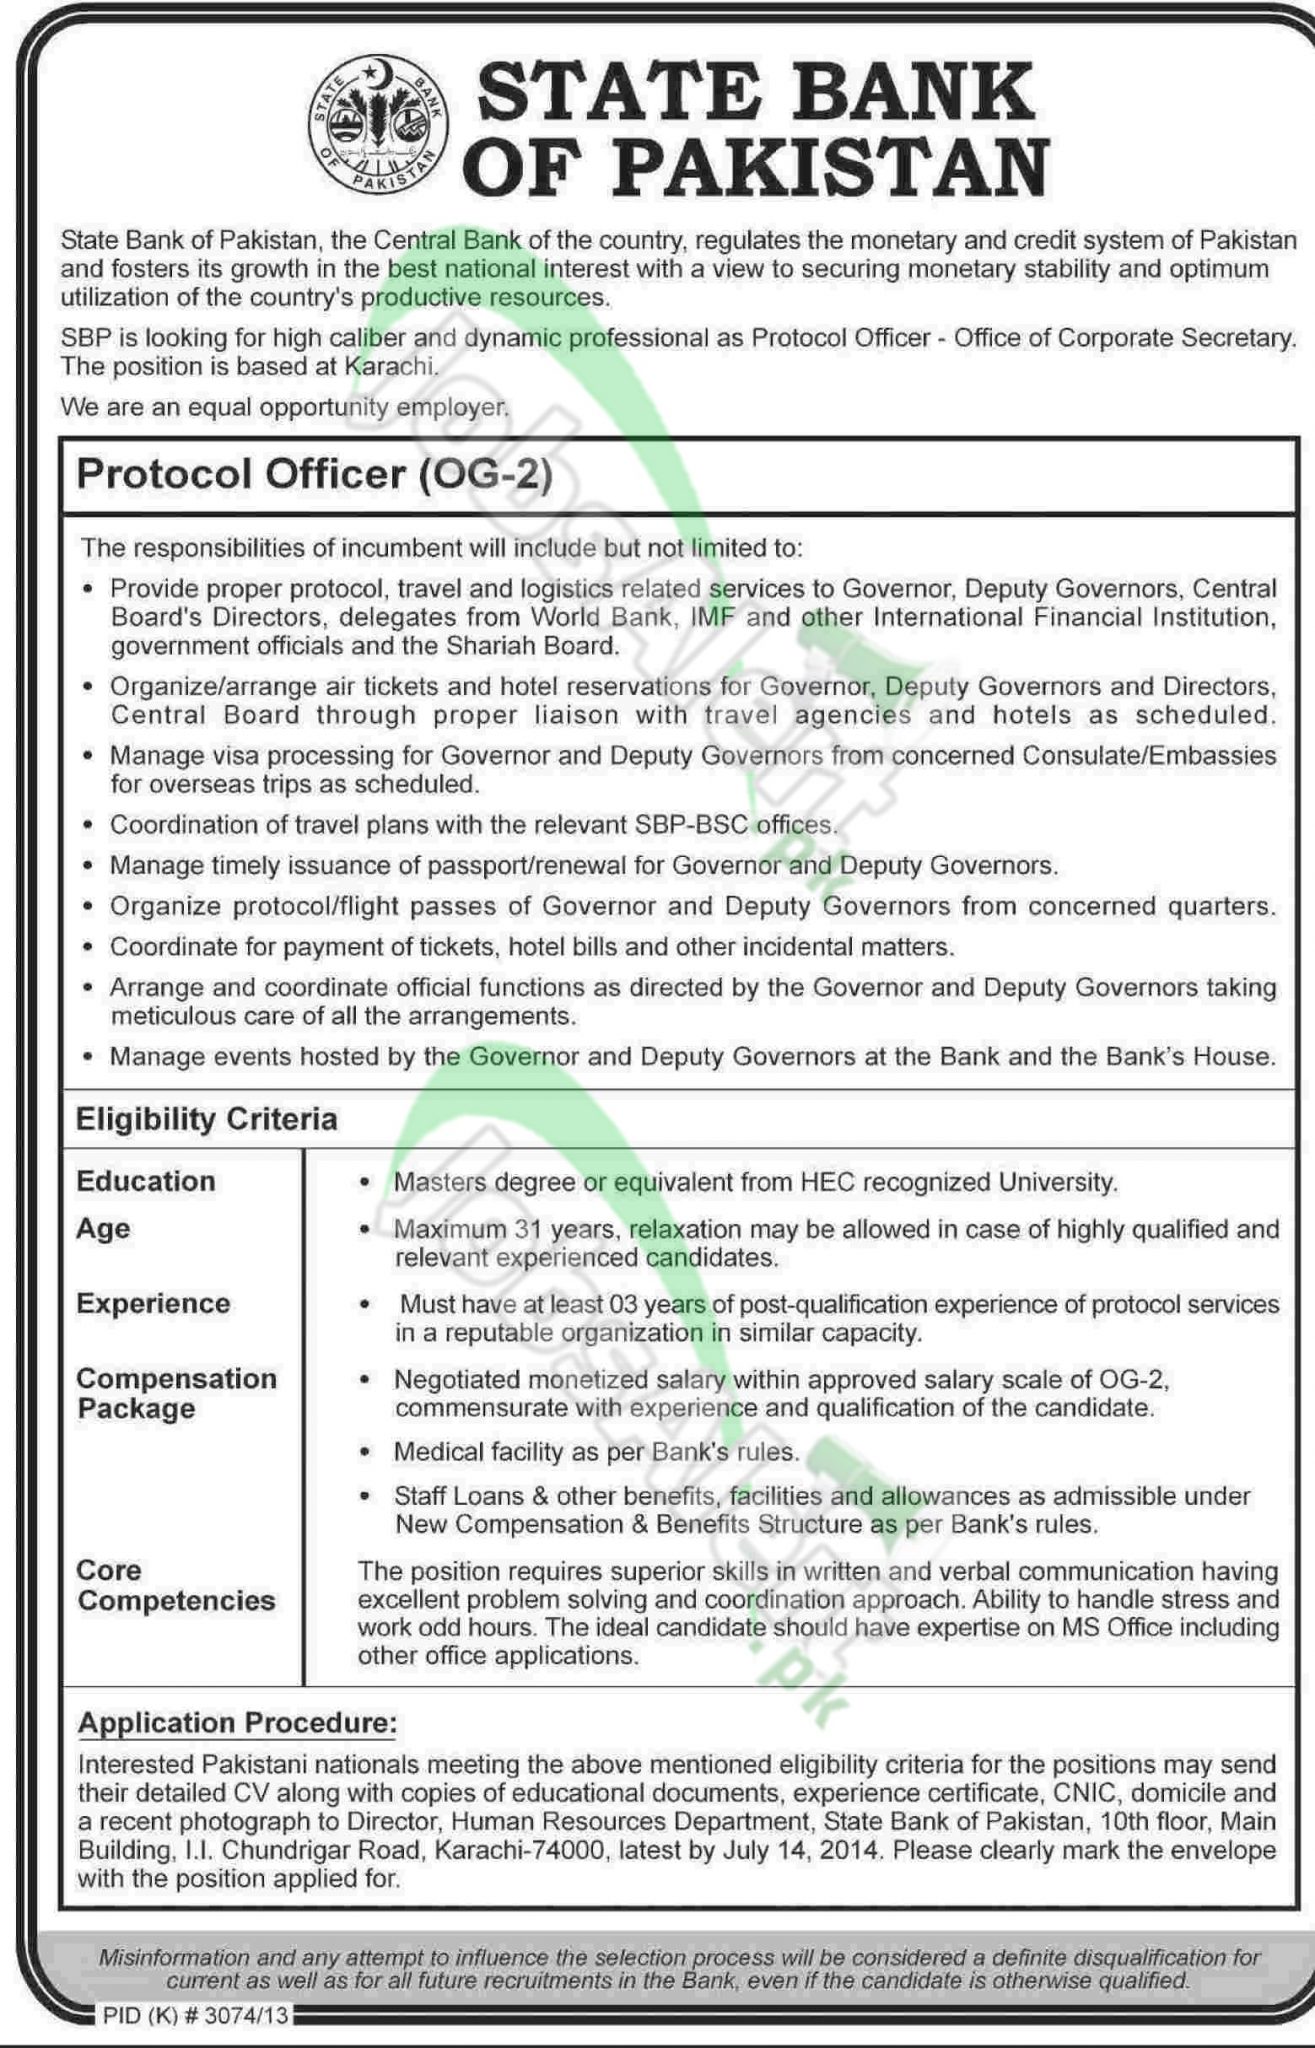 State bank of pakistan job vacancy